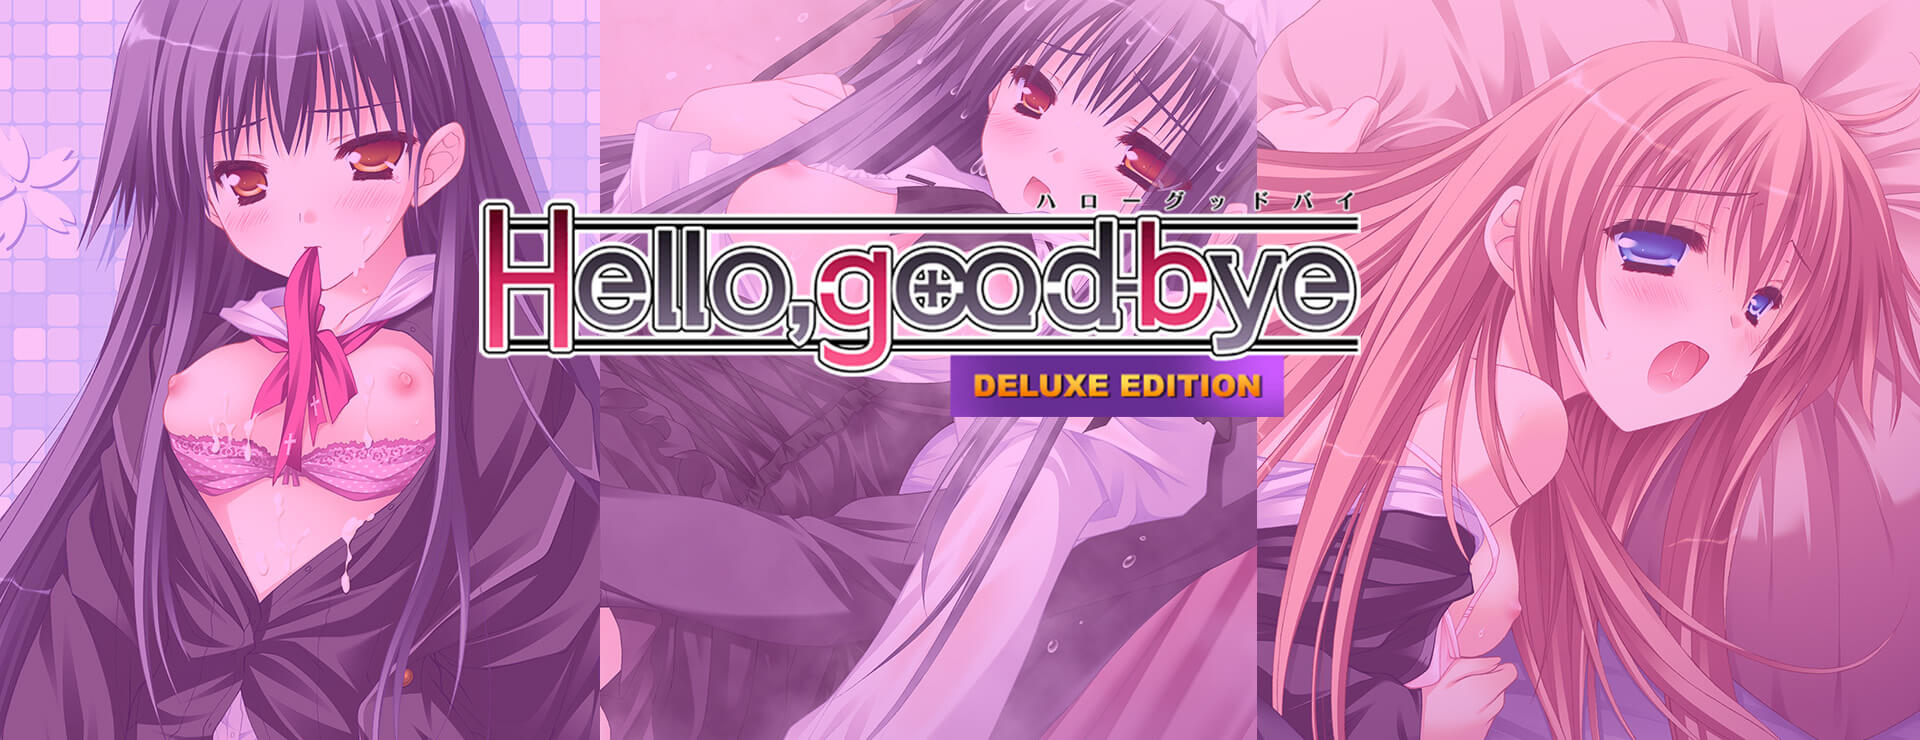 Hello, Goodbye (Deluxe Edition) - ビジュアルノベル ゲーム